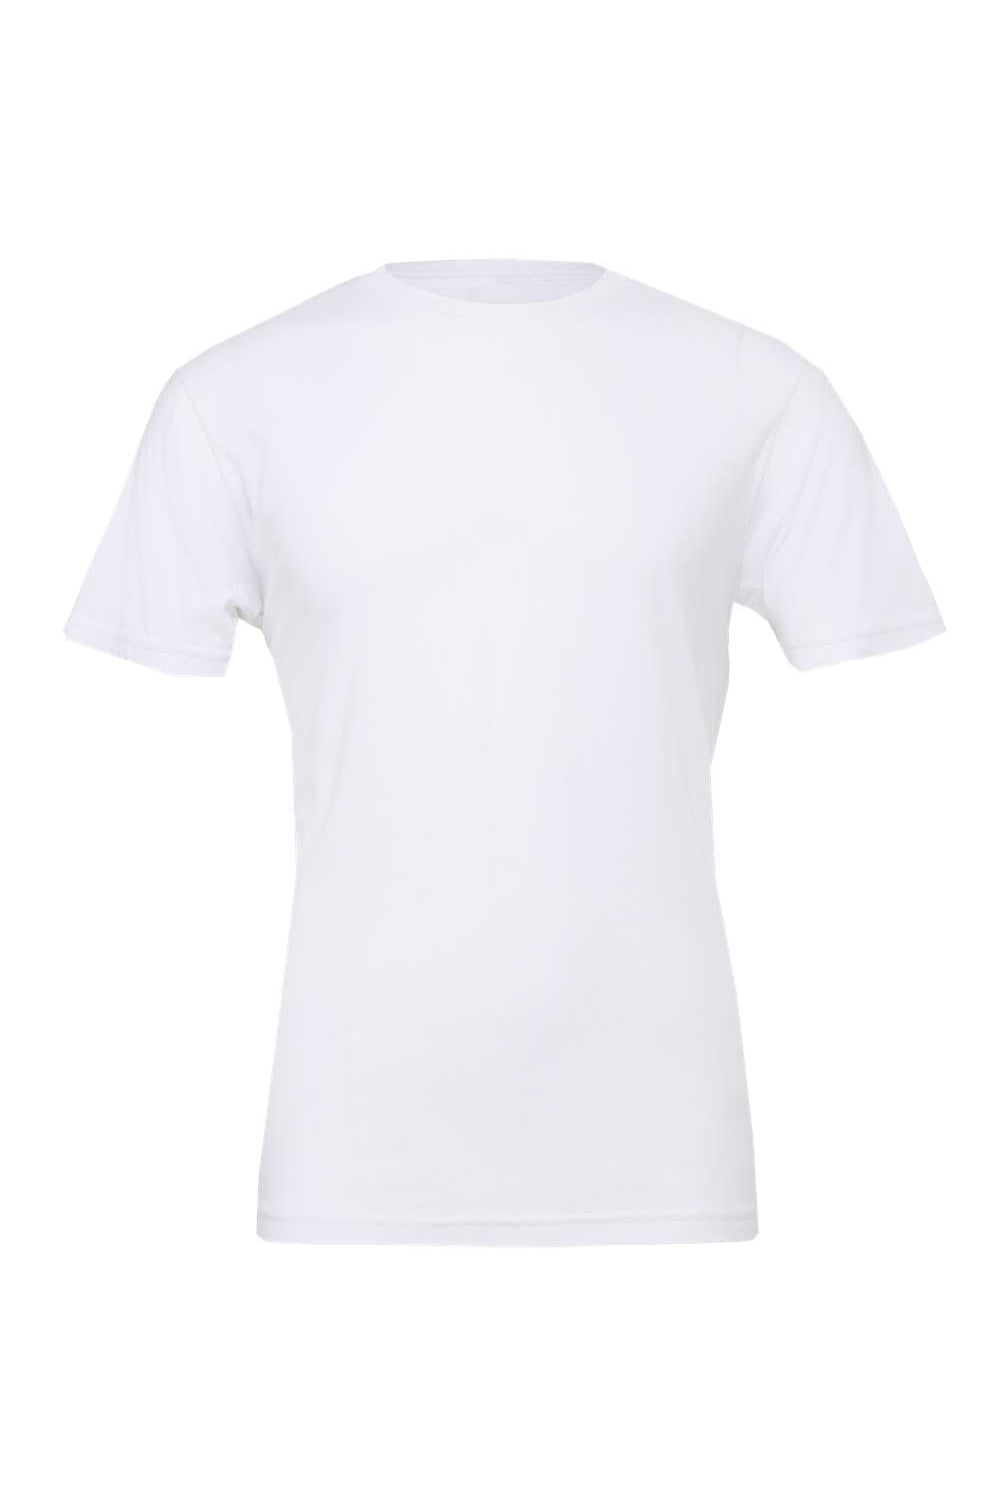 Bella + Canvas BC3001/3001C Mens Jersey Short Sleeve Crewneck T-Shirt White Flat Front